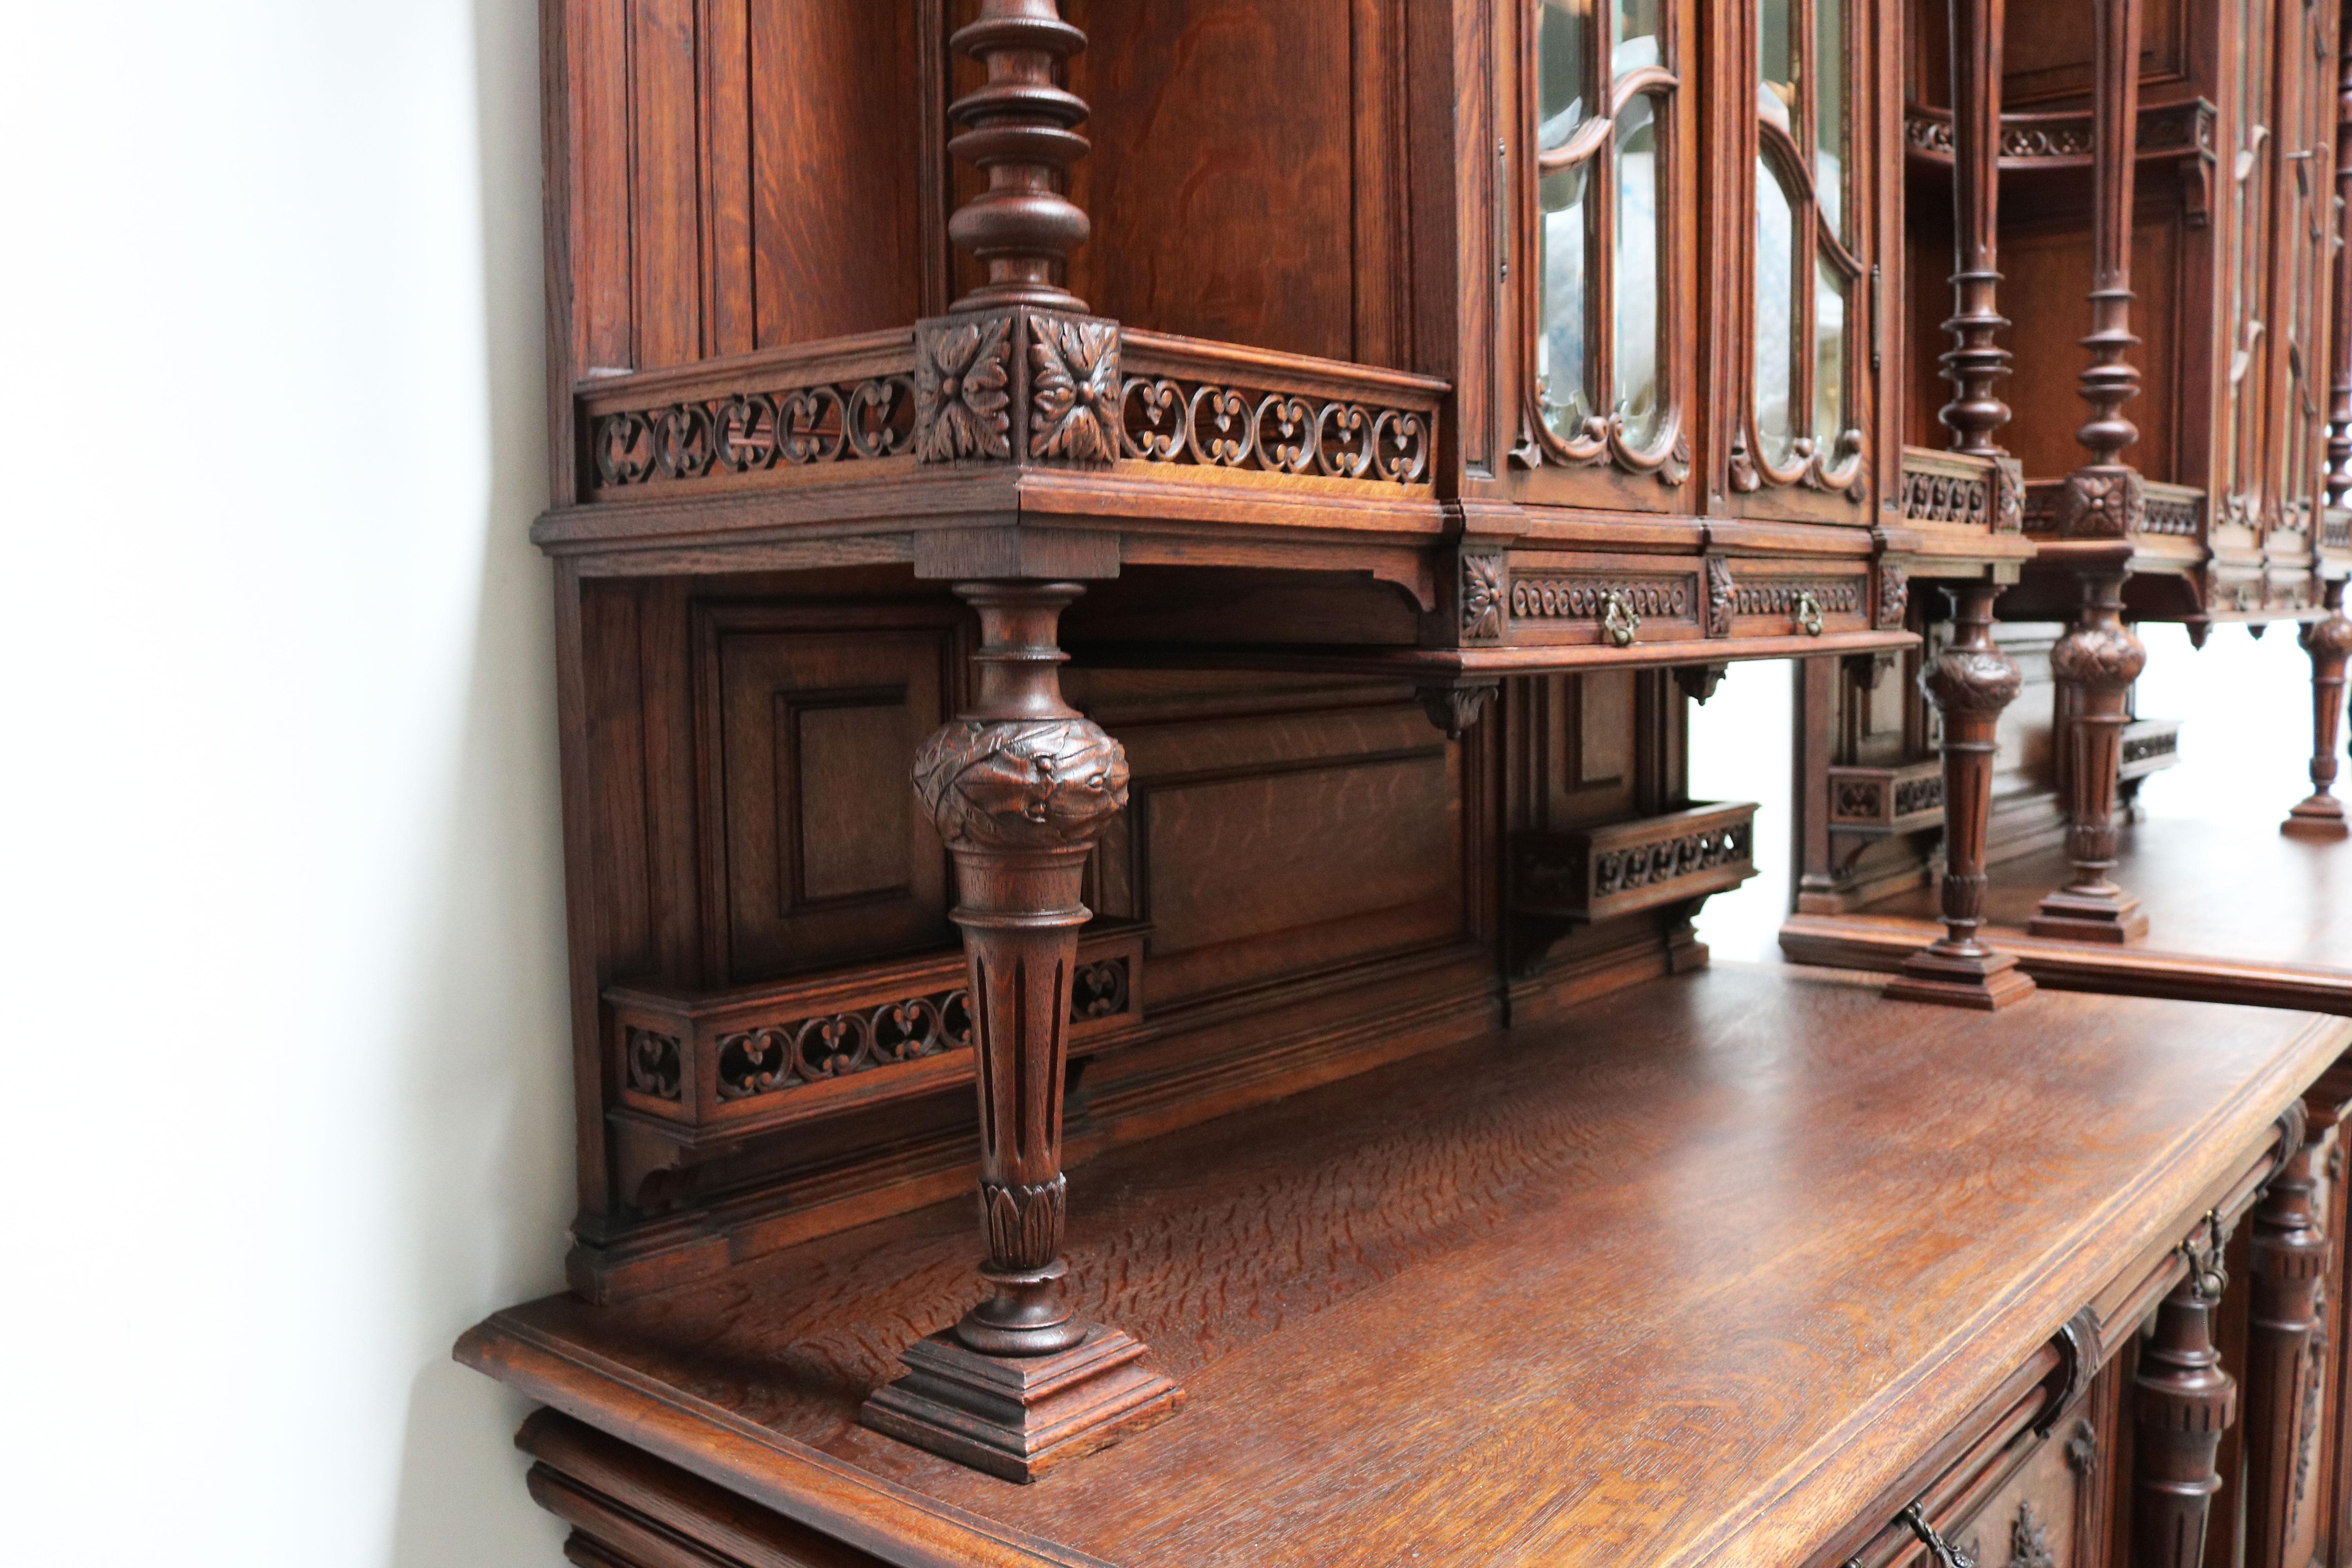 Pair of Large French Antique Renaissance Revival Buffet Cabinet Oak 19th Century For Sale 1